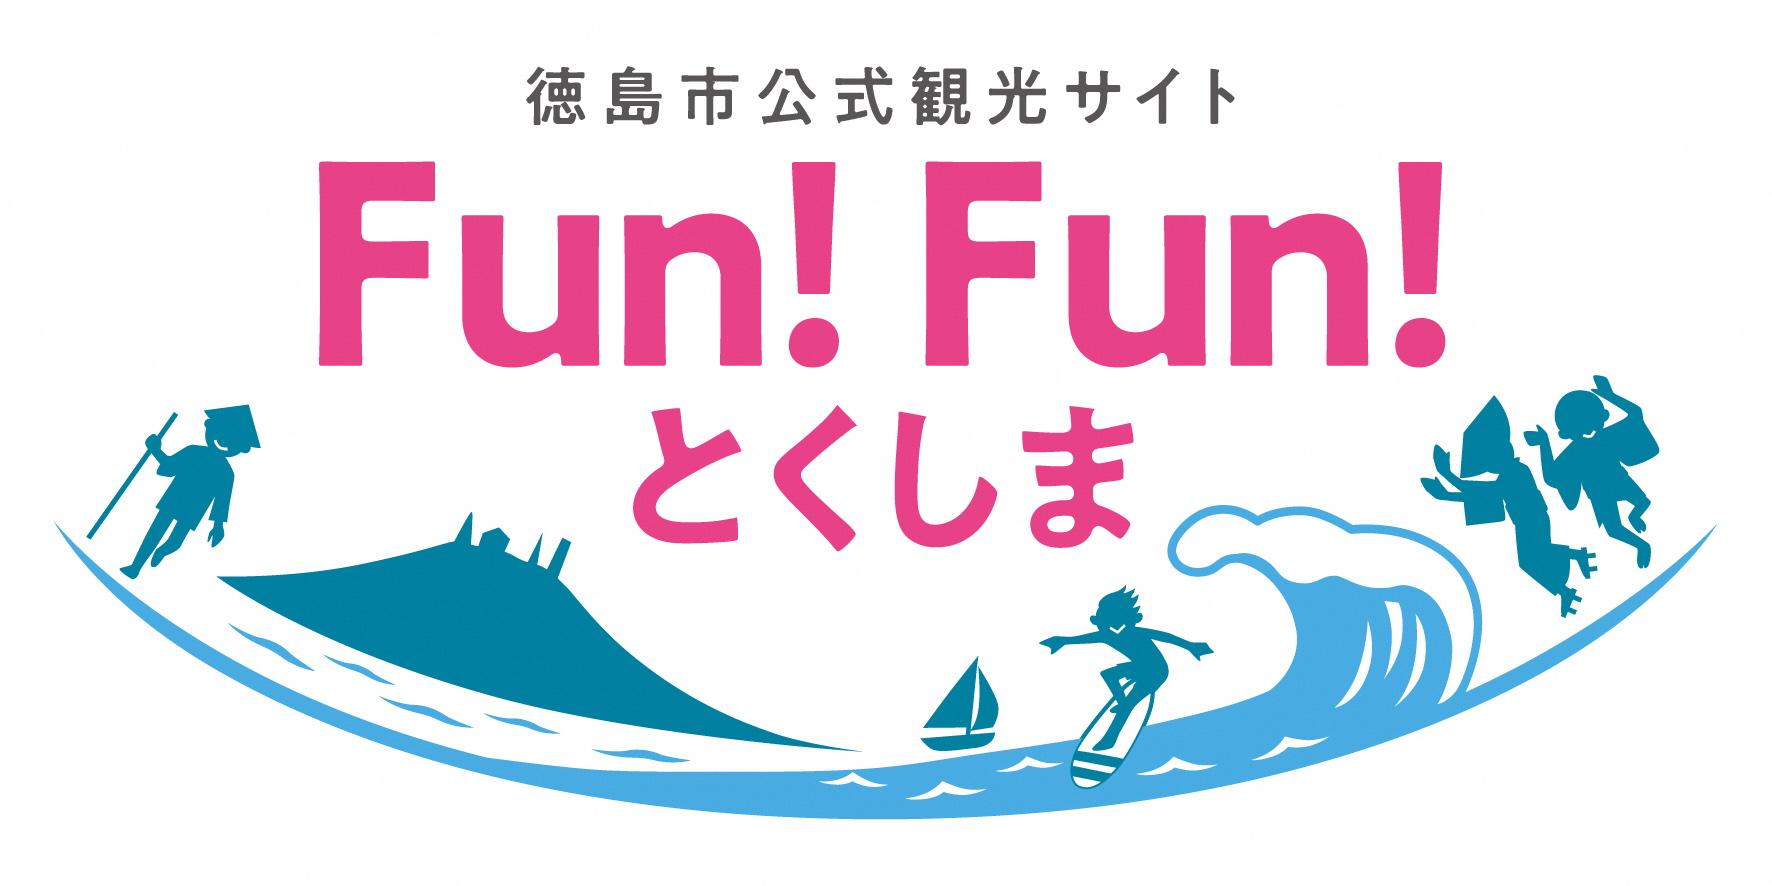 Fun!Fun!とくしま【徳島市公式観光サイト】